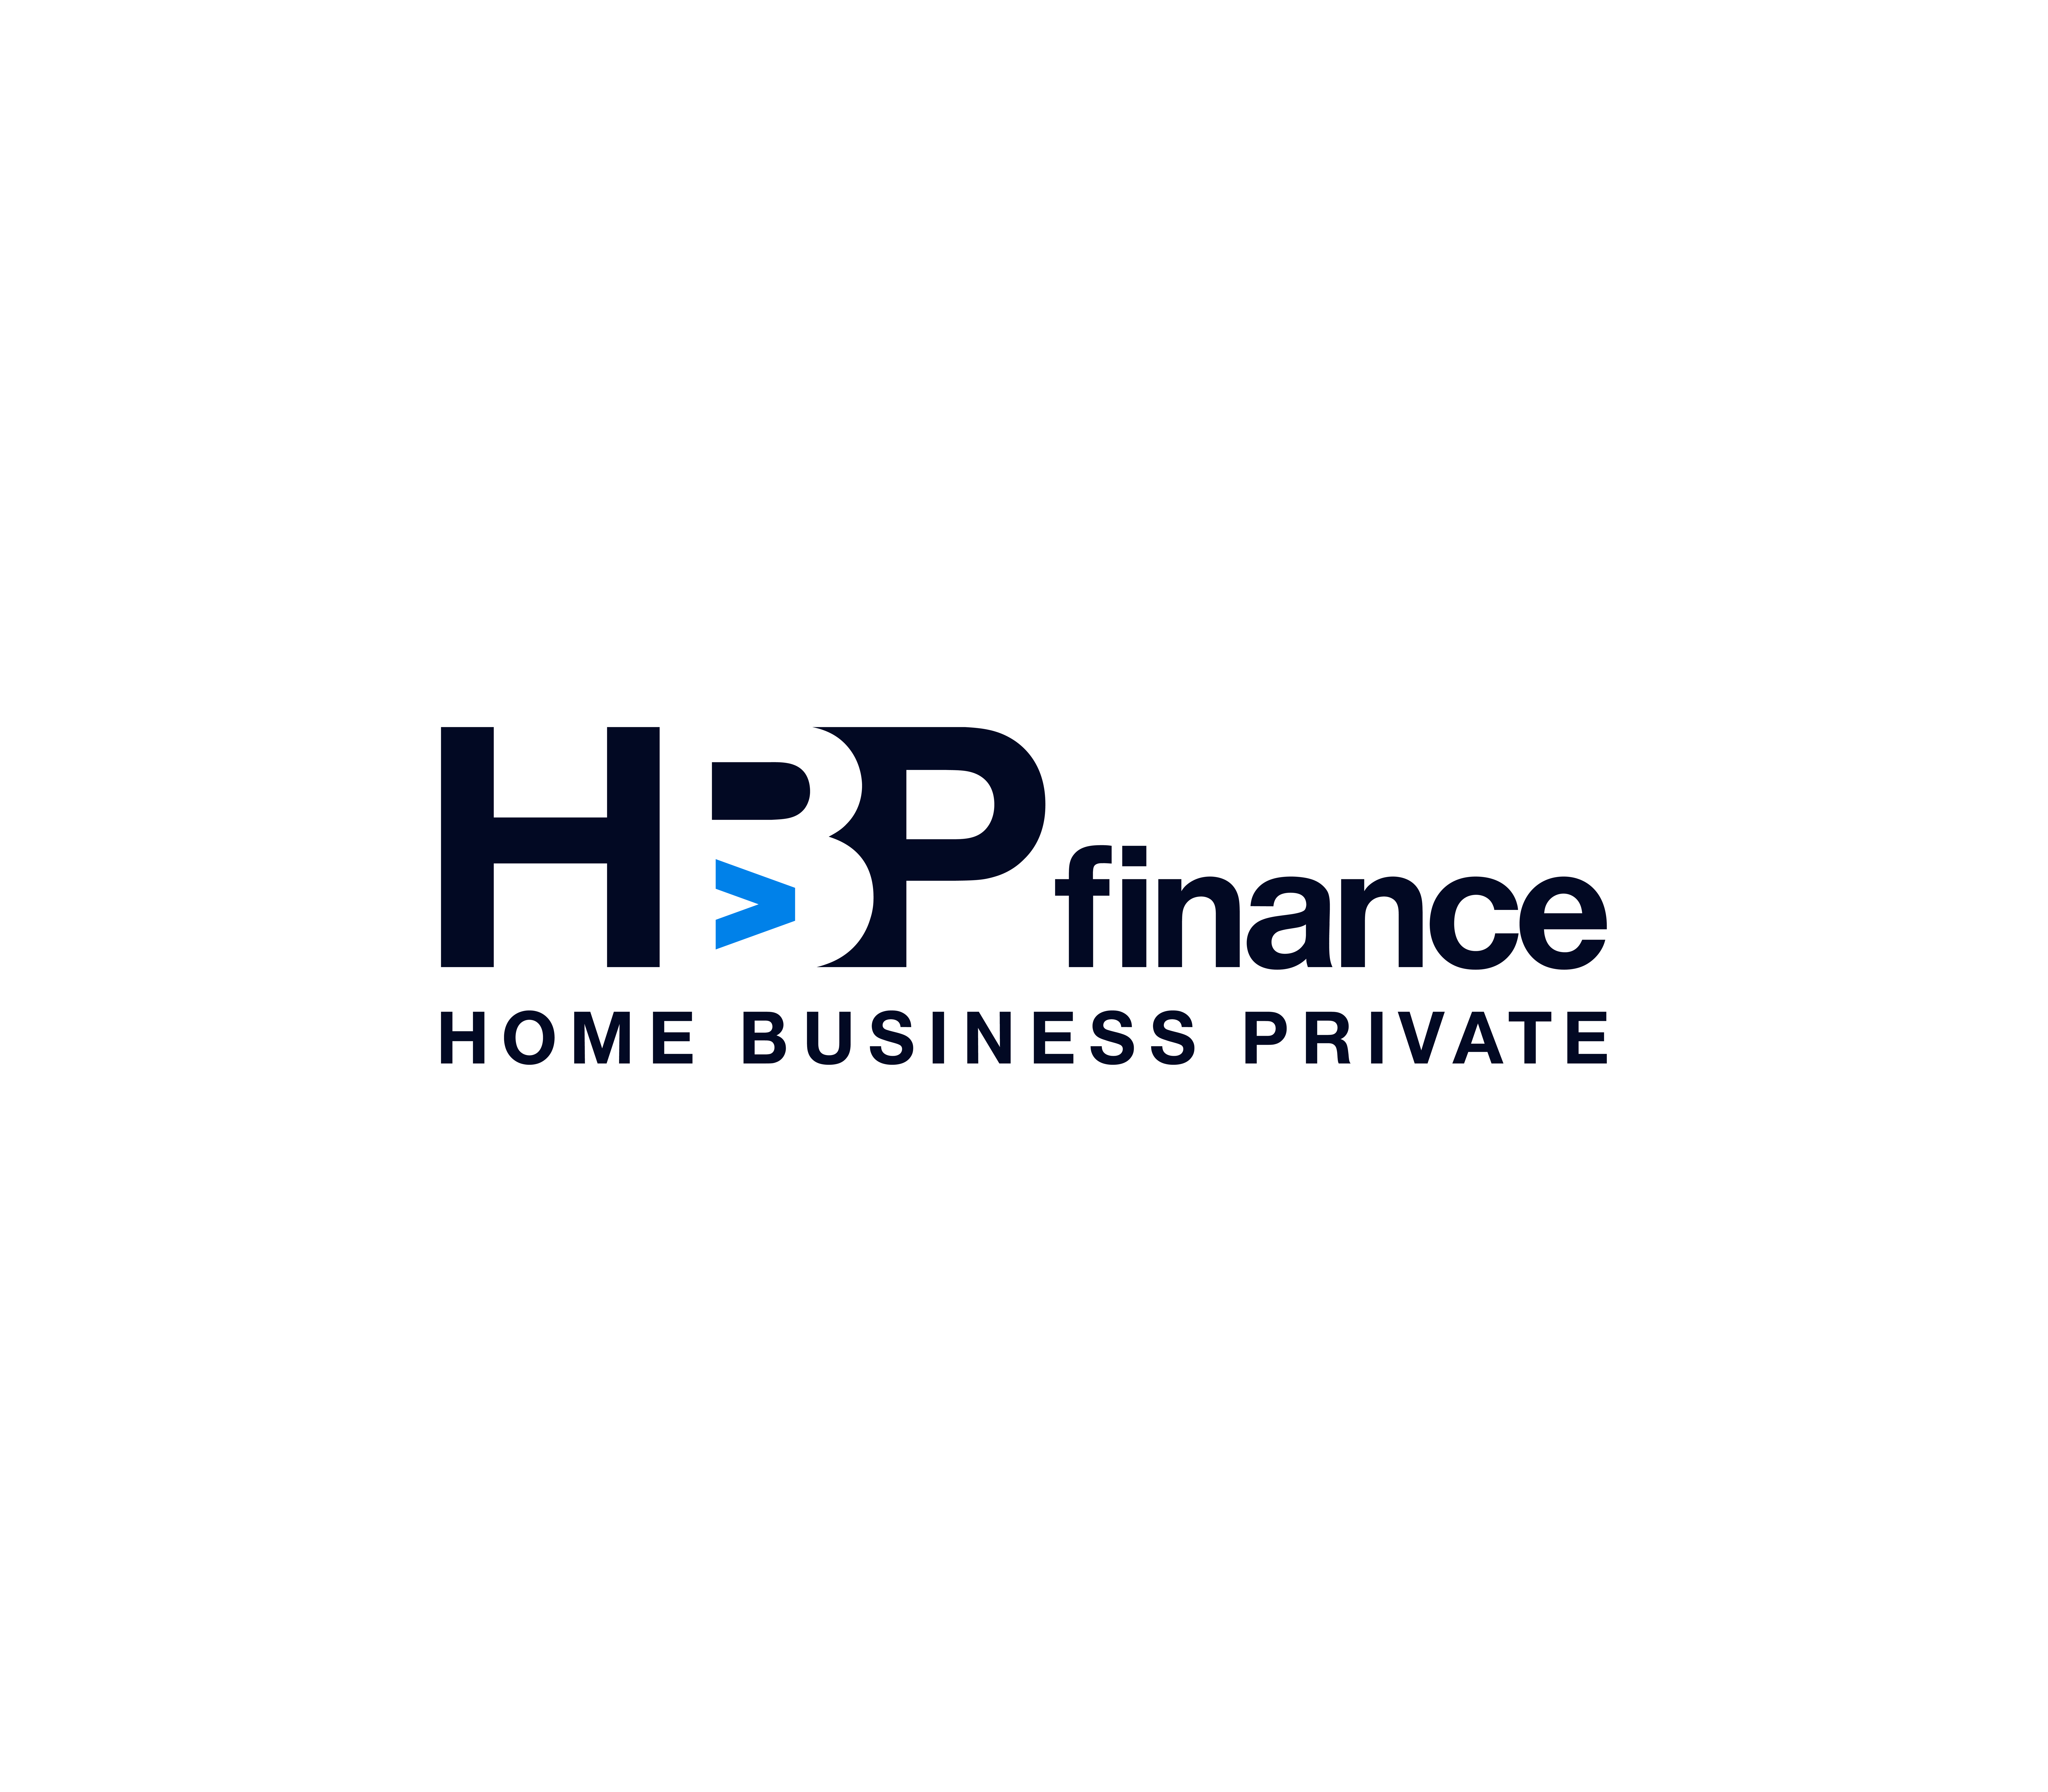 HBP Finance